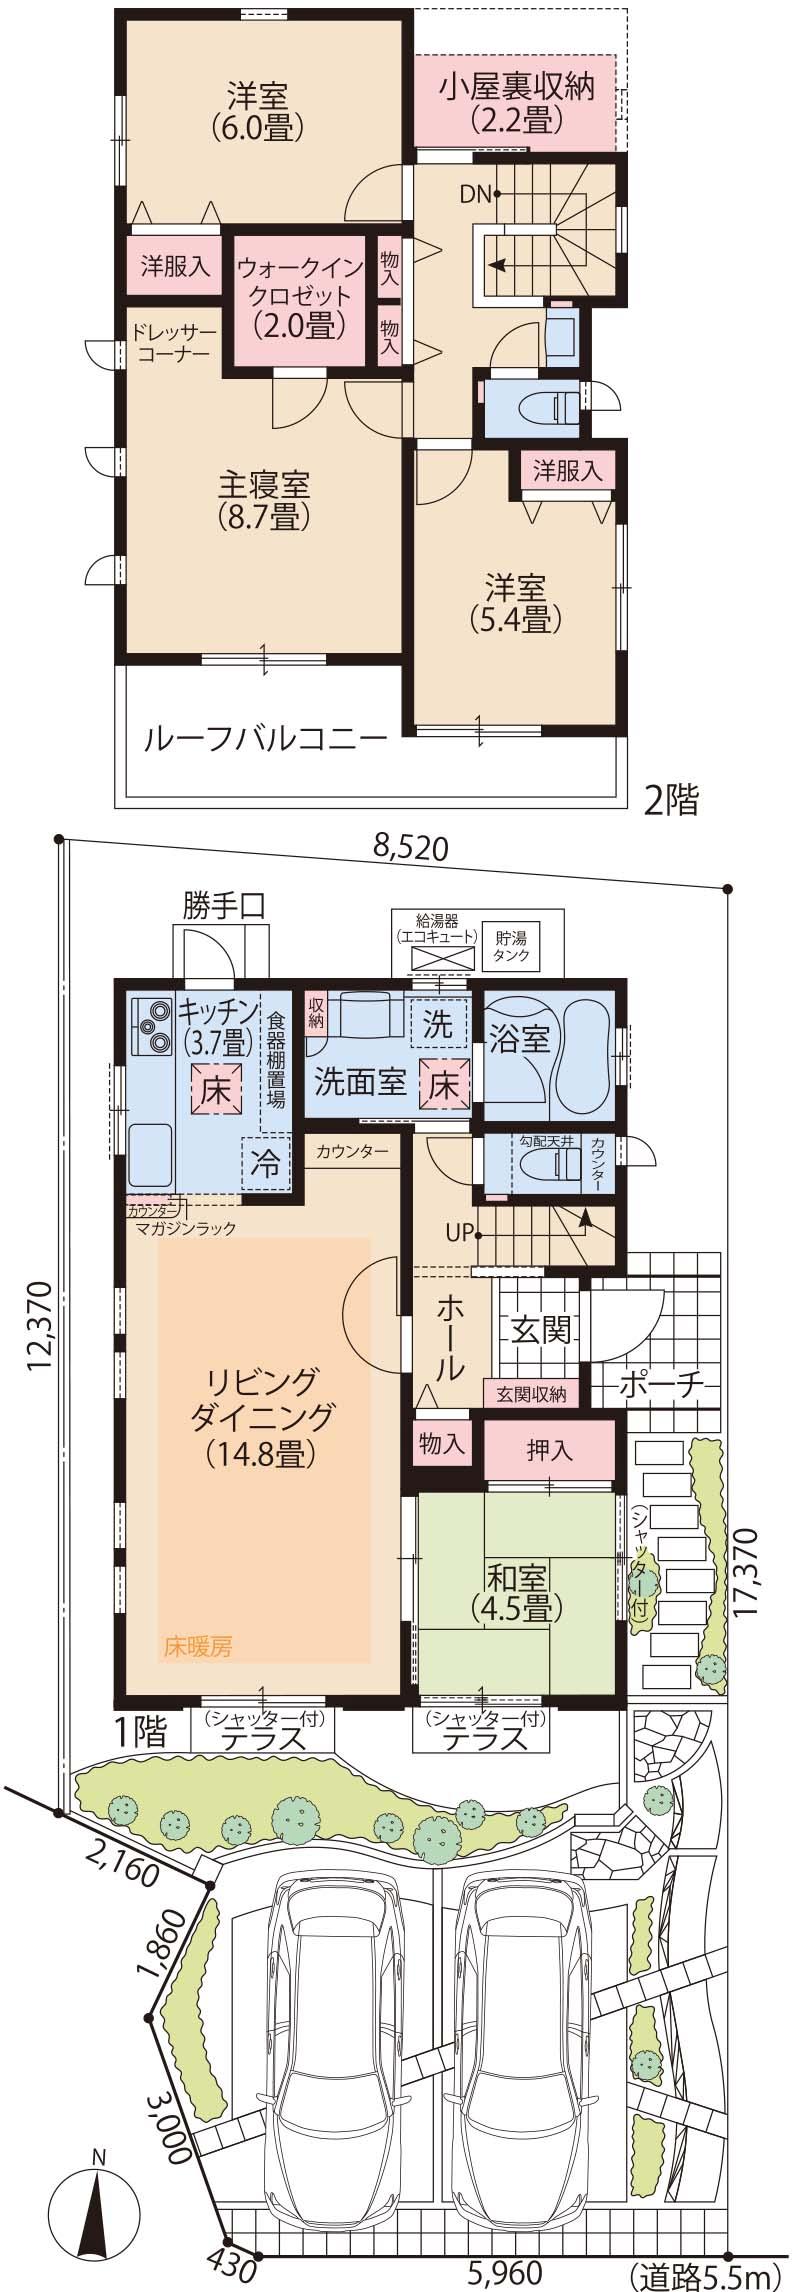 Floor plan. (Plan NO13-5 (Keikyu real estate)), Price 51,900,000 yen, 4LDK, Land area 141.68 sq m , Building area 107.62 sq m